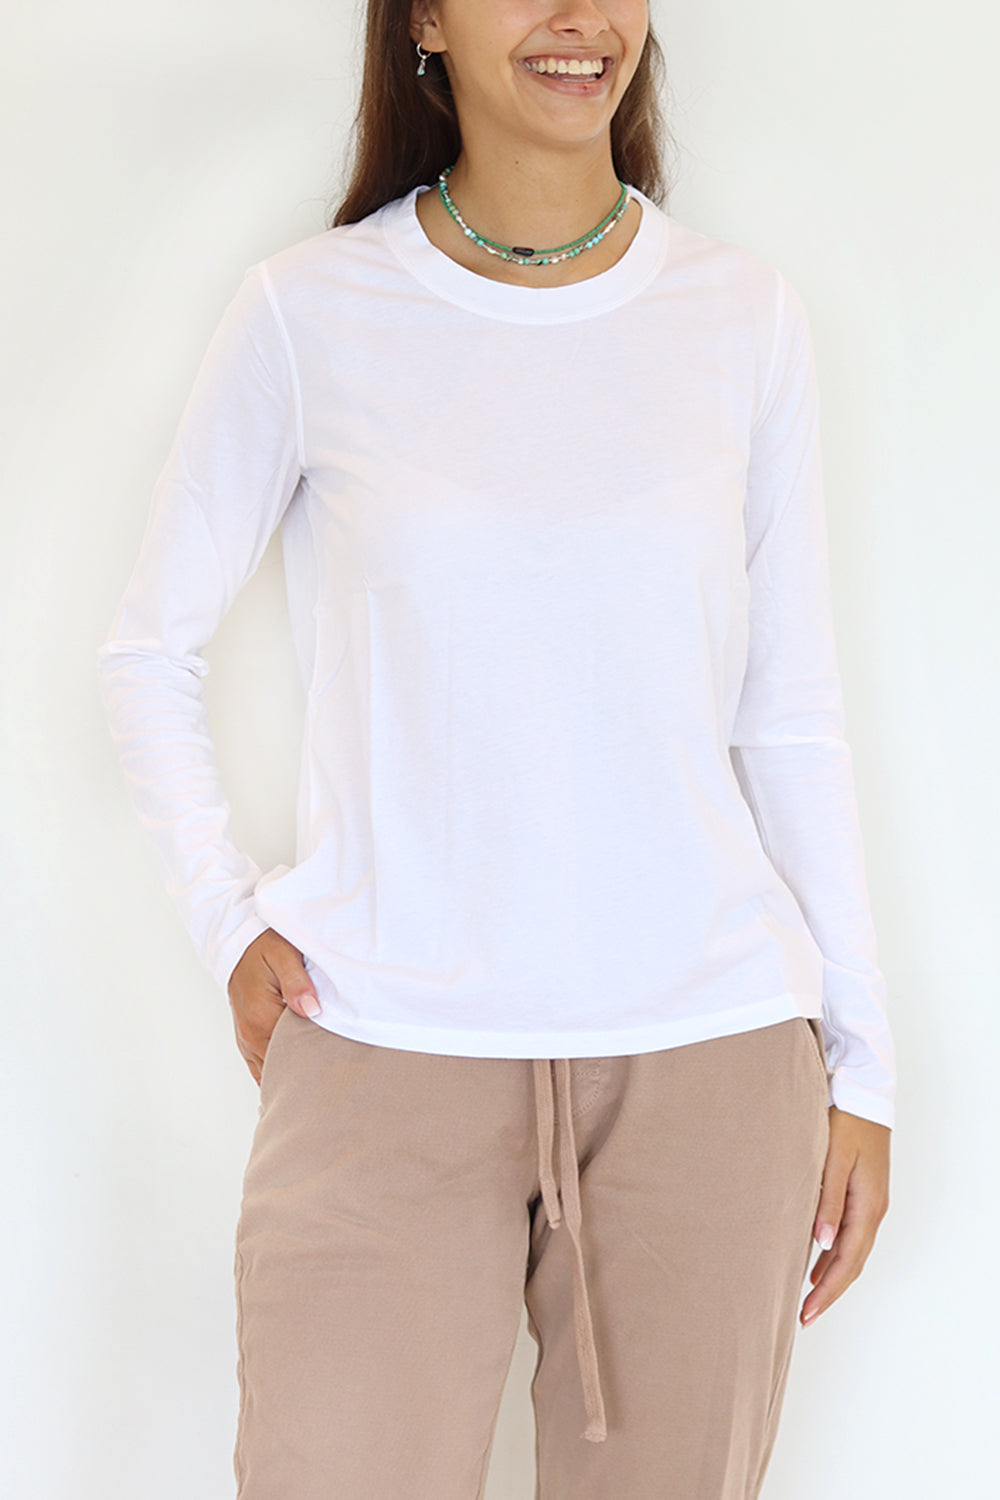 Niki Long Sleeve T-Shirt White